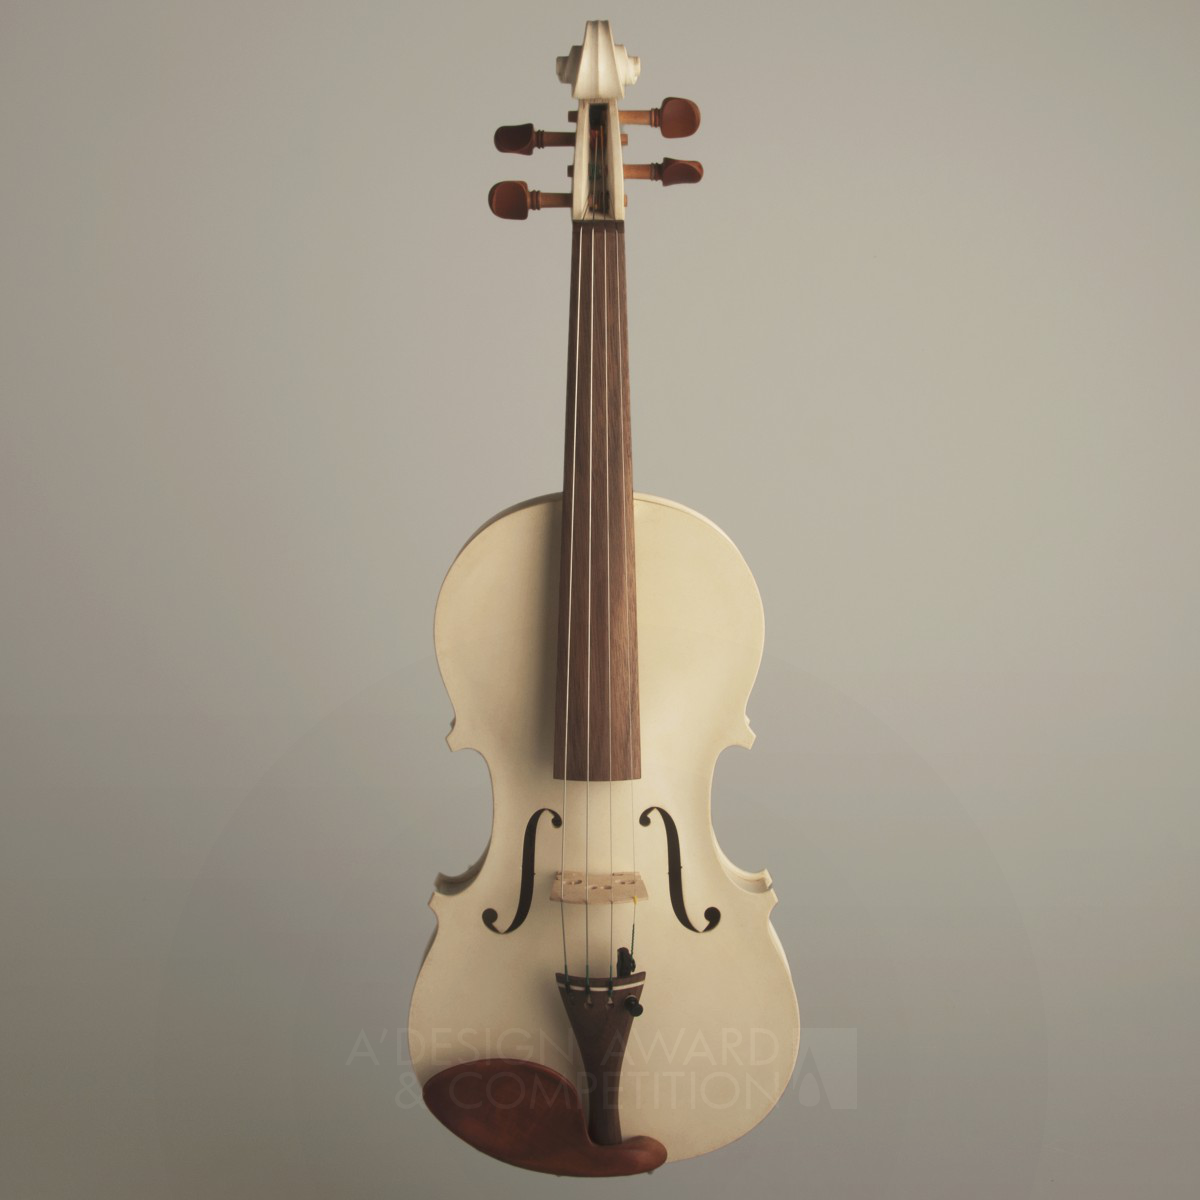 P&#039;iolin Musical Instrument, Paper Craftwork